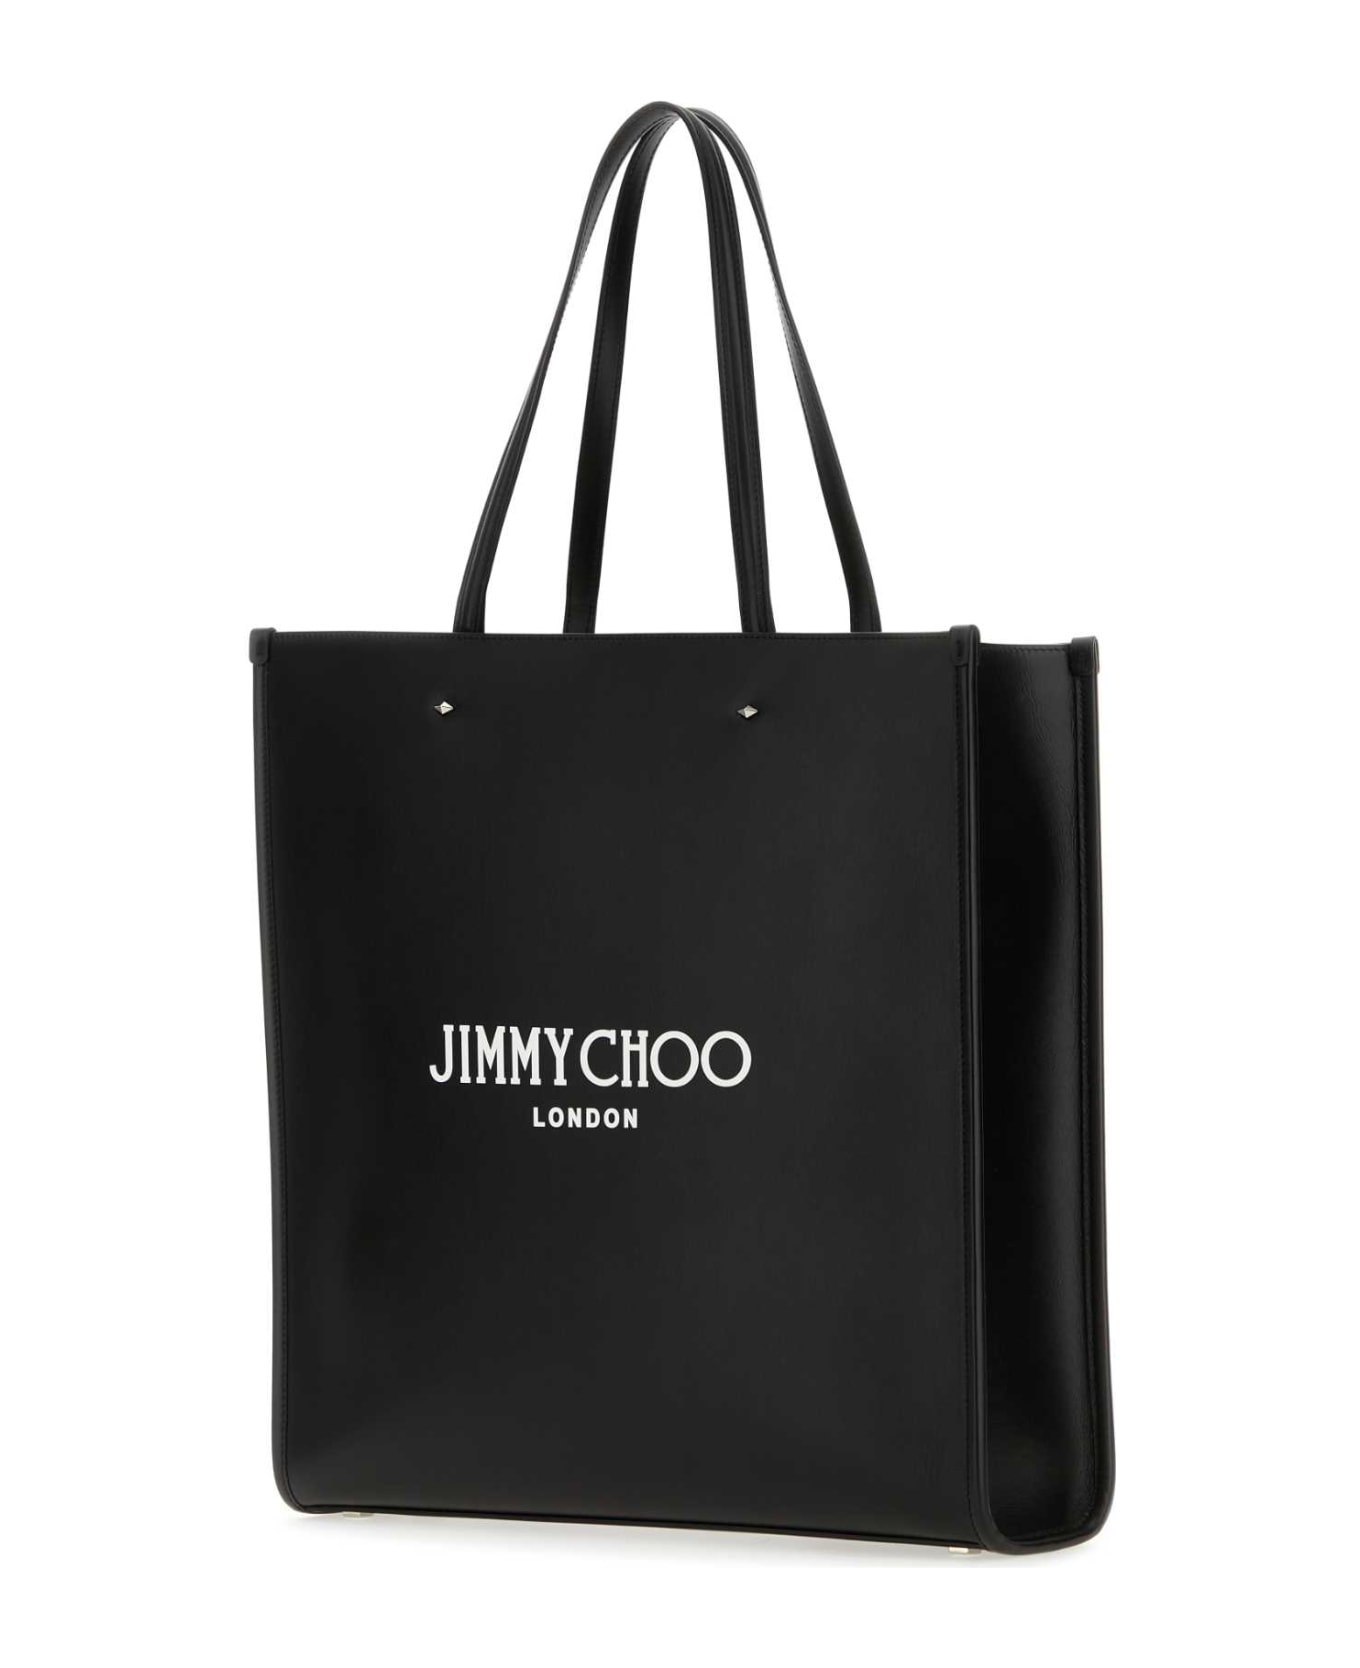 Jimmy Choo Black Leather N/s Tote M Shopping Bag - BLACKWHITESILVER トートバッグ